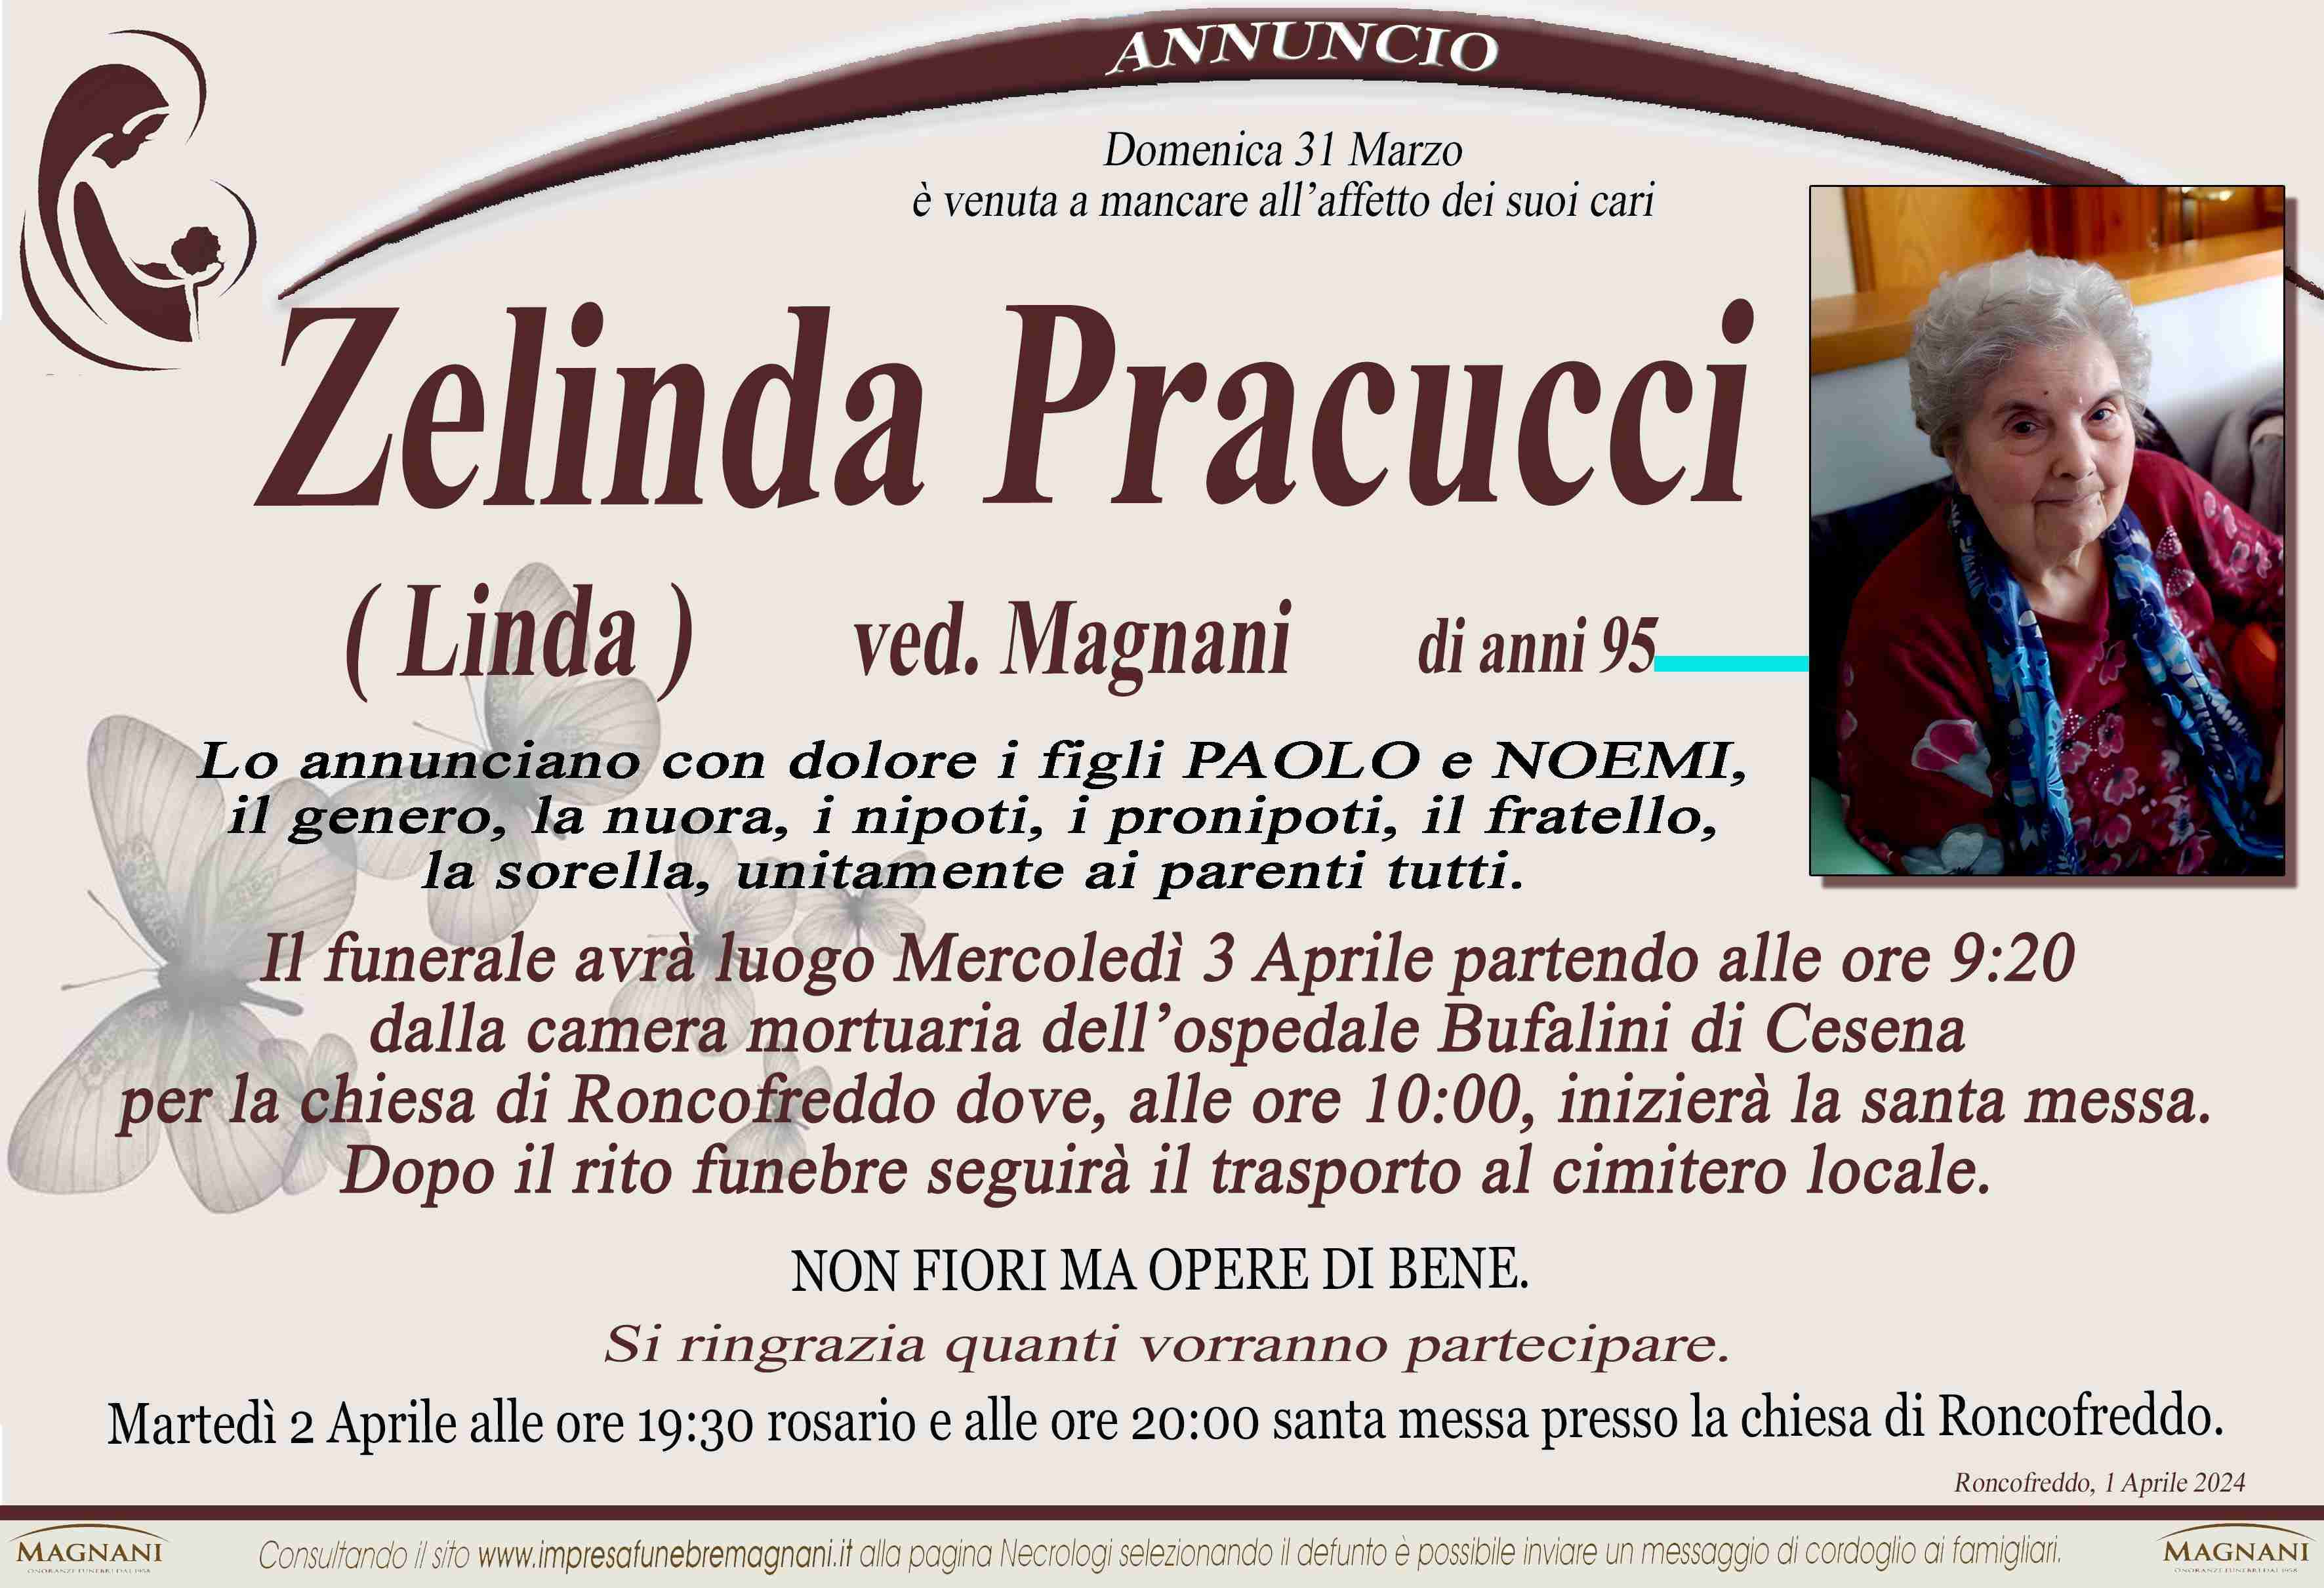 Pracucci Zelinda (Linda)